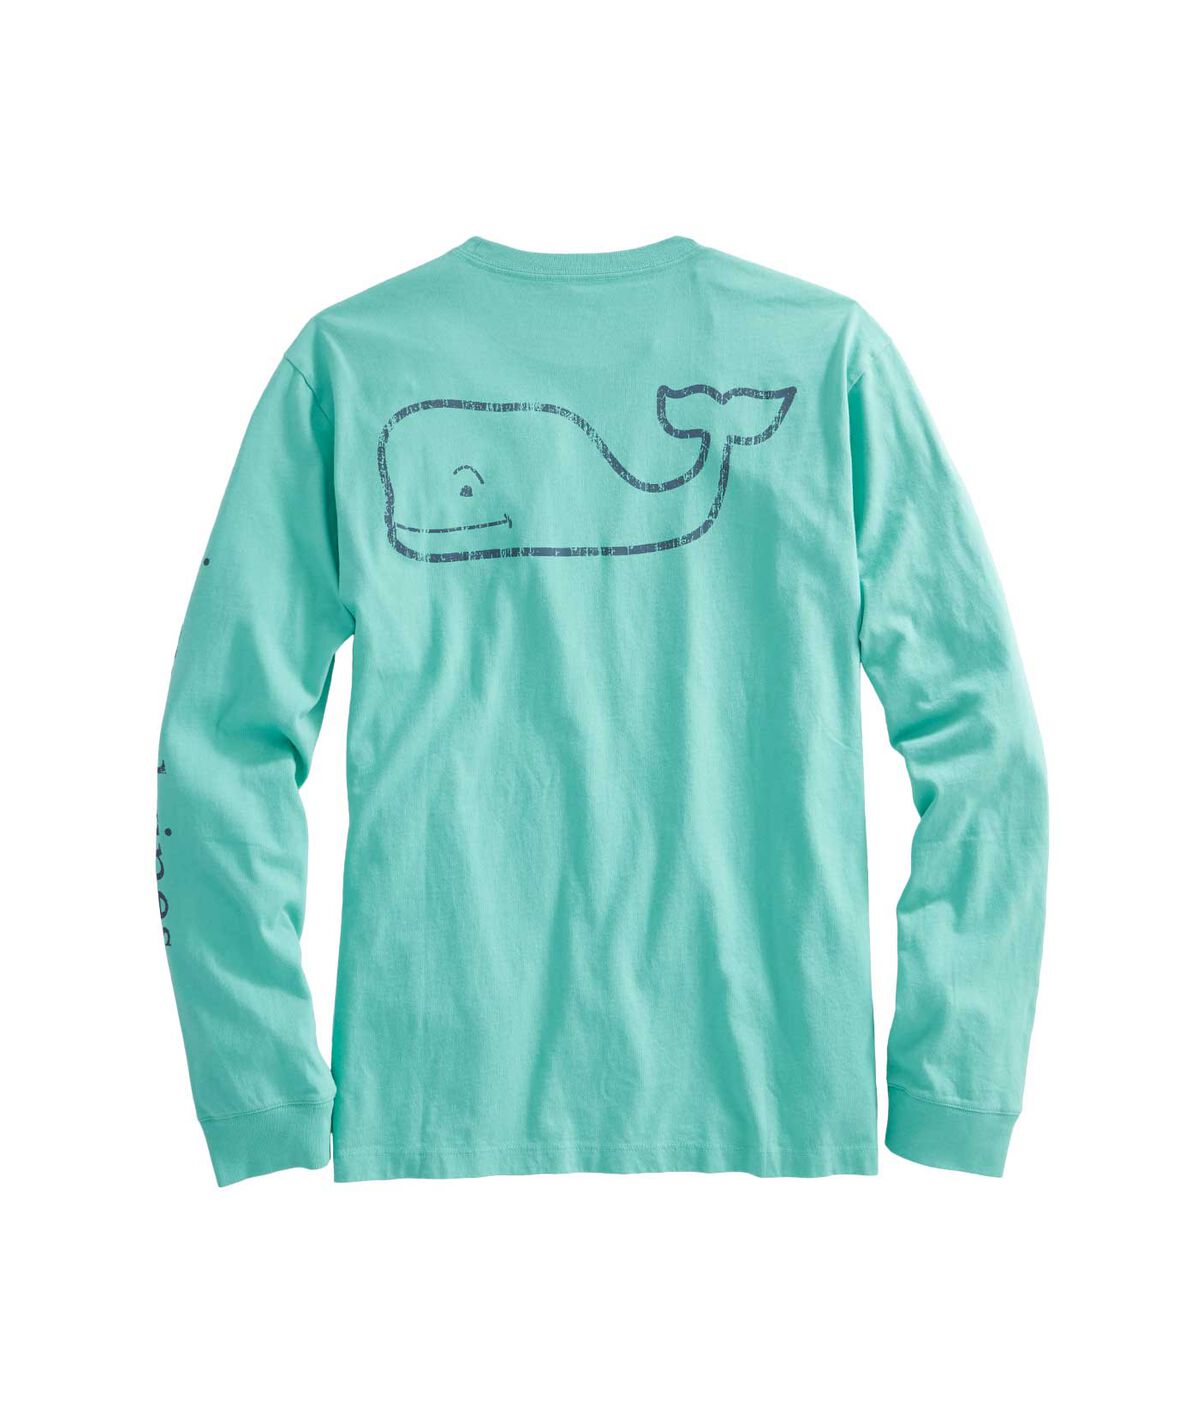 Shop Long-Sleeve Vintage Whale Graphic Pocket T-Shirt at vineyard vines